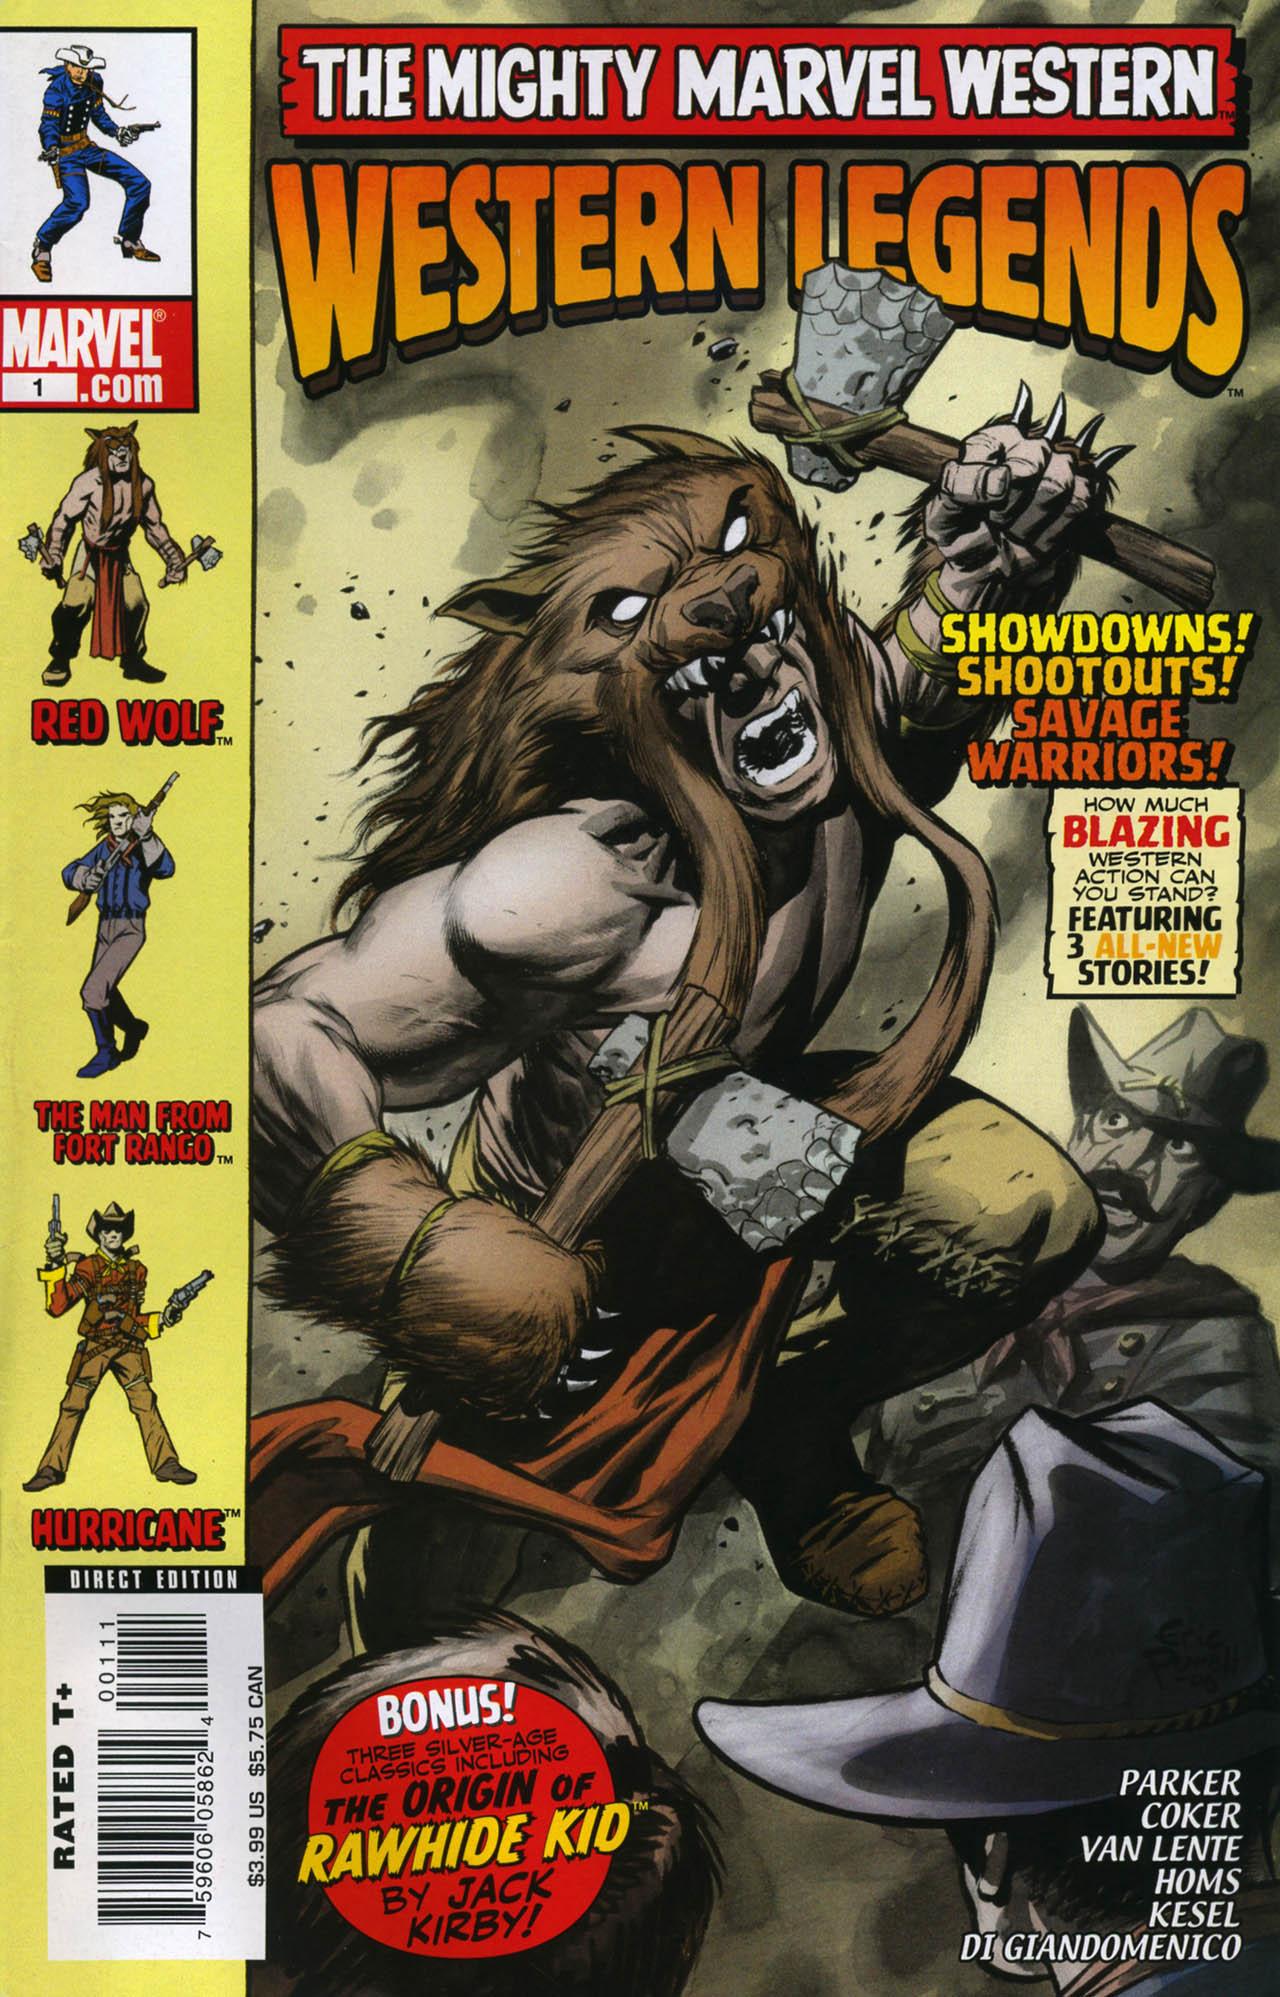 Mighty Marvel Western - Western Legends Vol. 1 #1